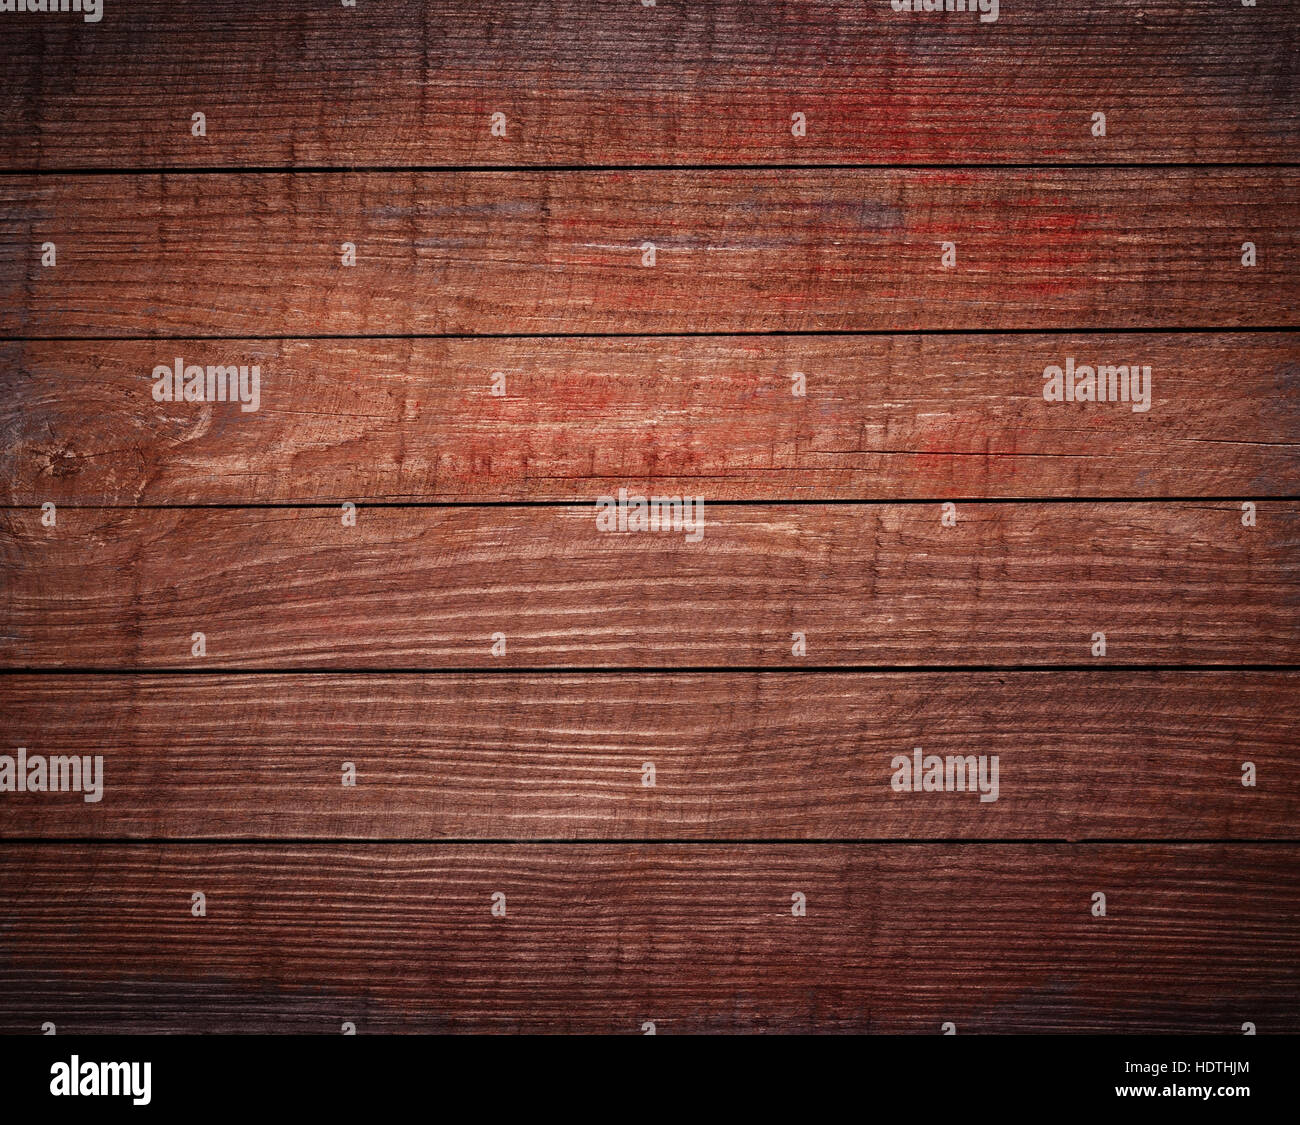 Dark brown wooden planks, tabletop, floor surface. Stock Photo